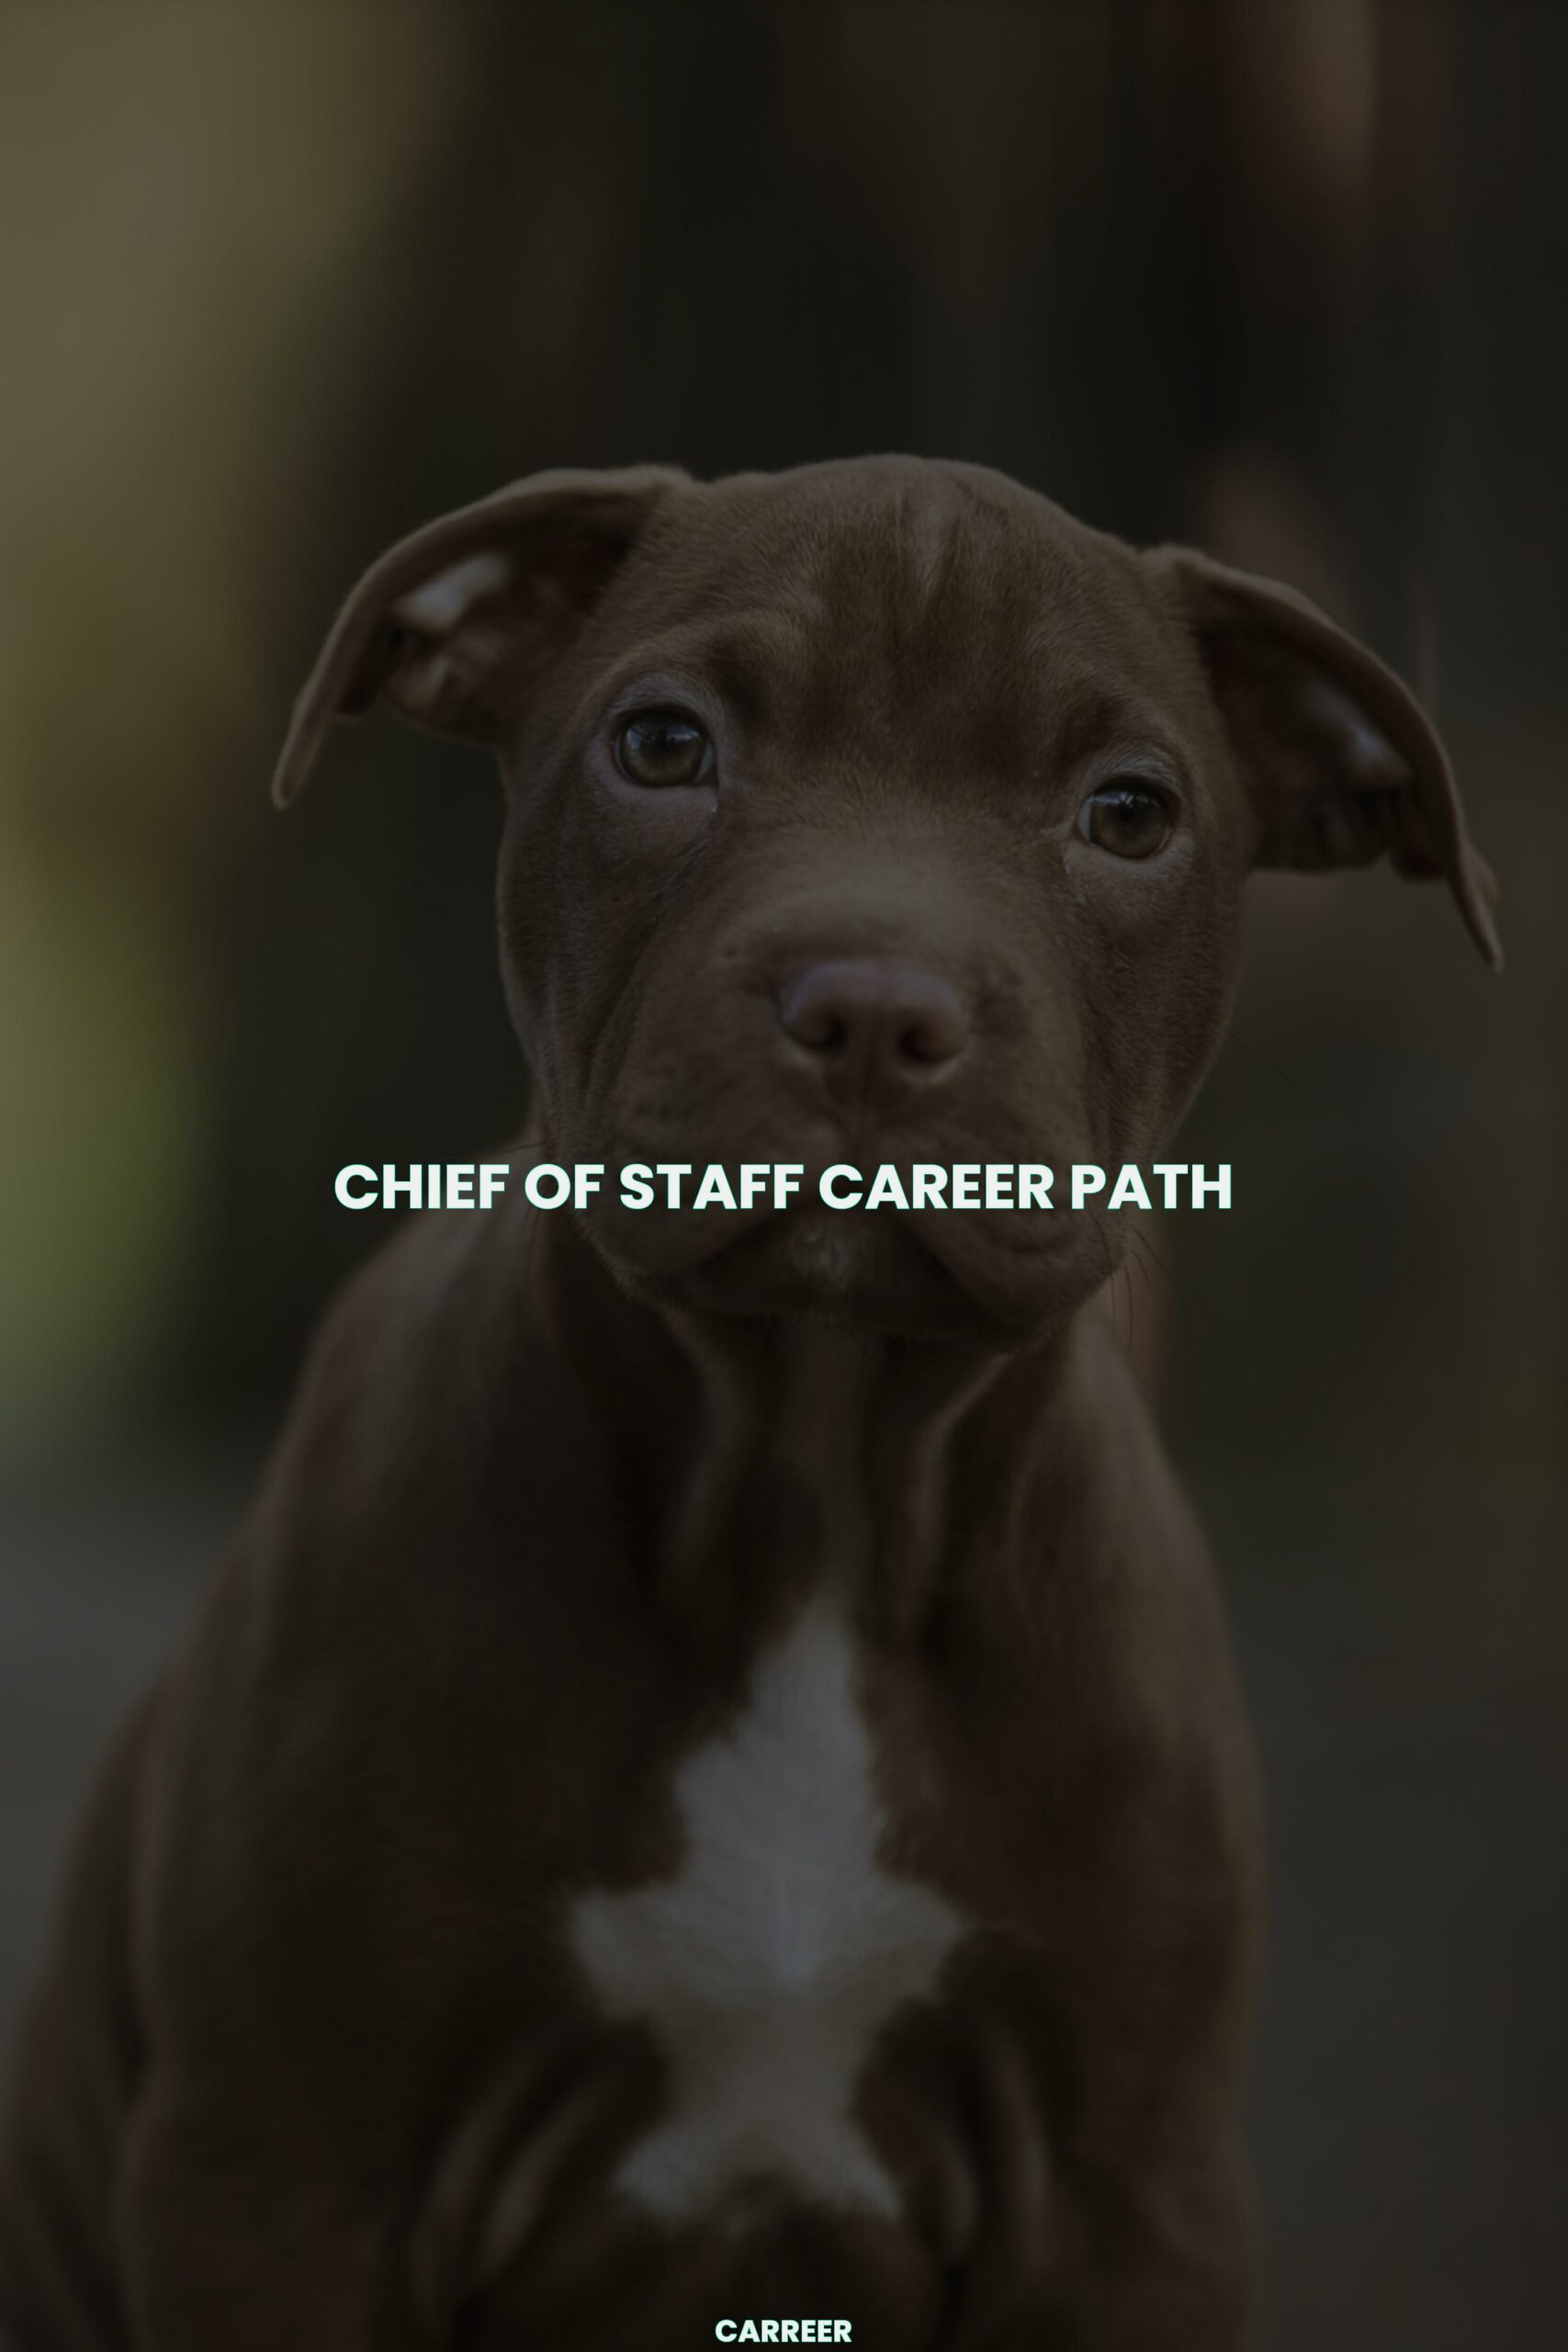 Chief of staff career path